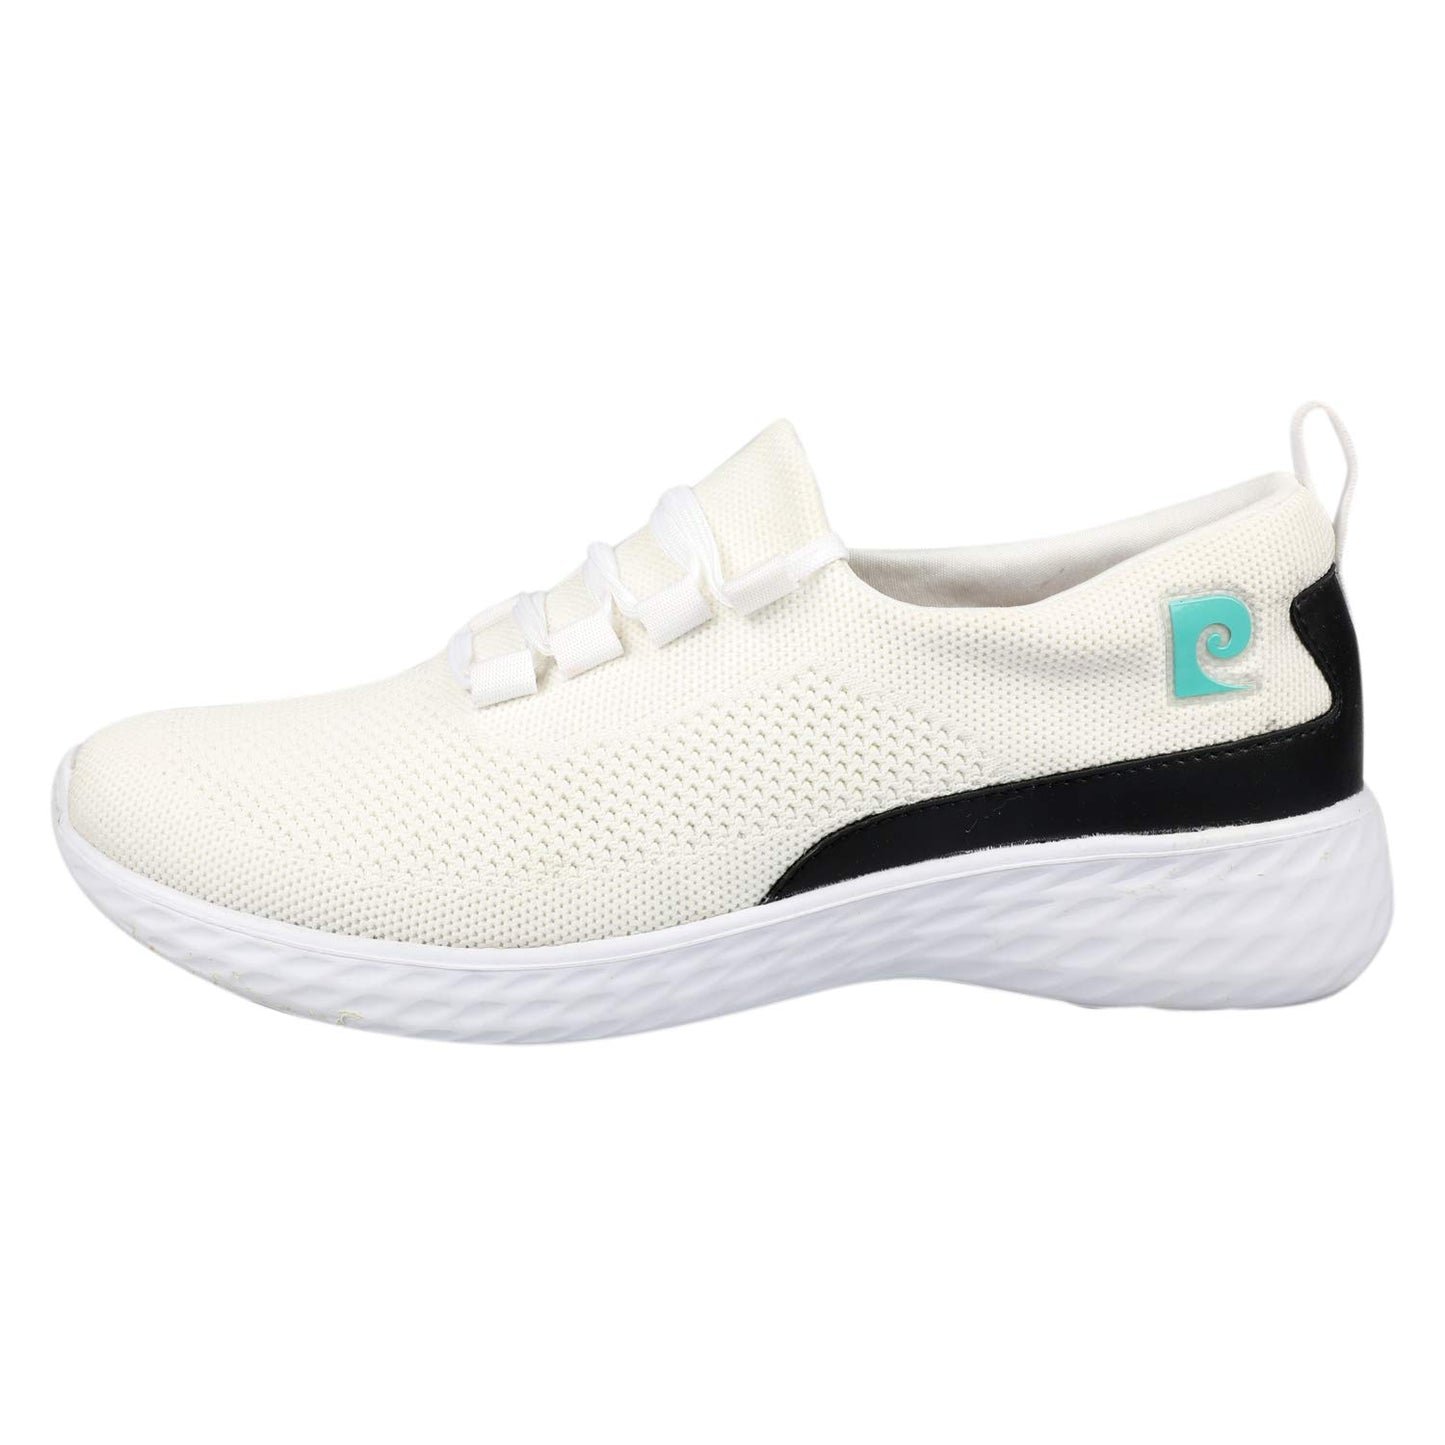 Pierre Cardin Women's Roya Trois White Running Shoes-7 UK (40 EU) (Energia PC0306)